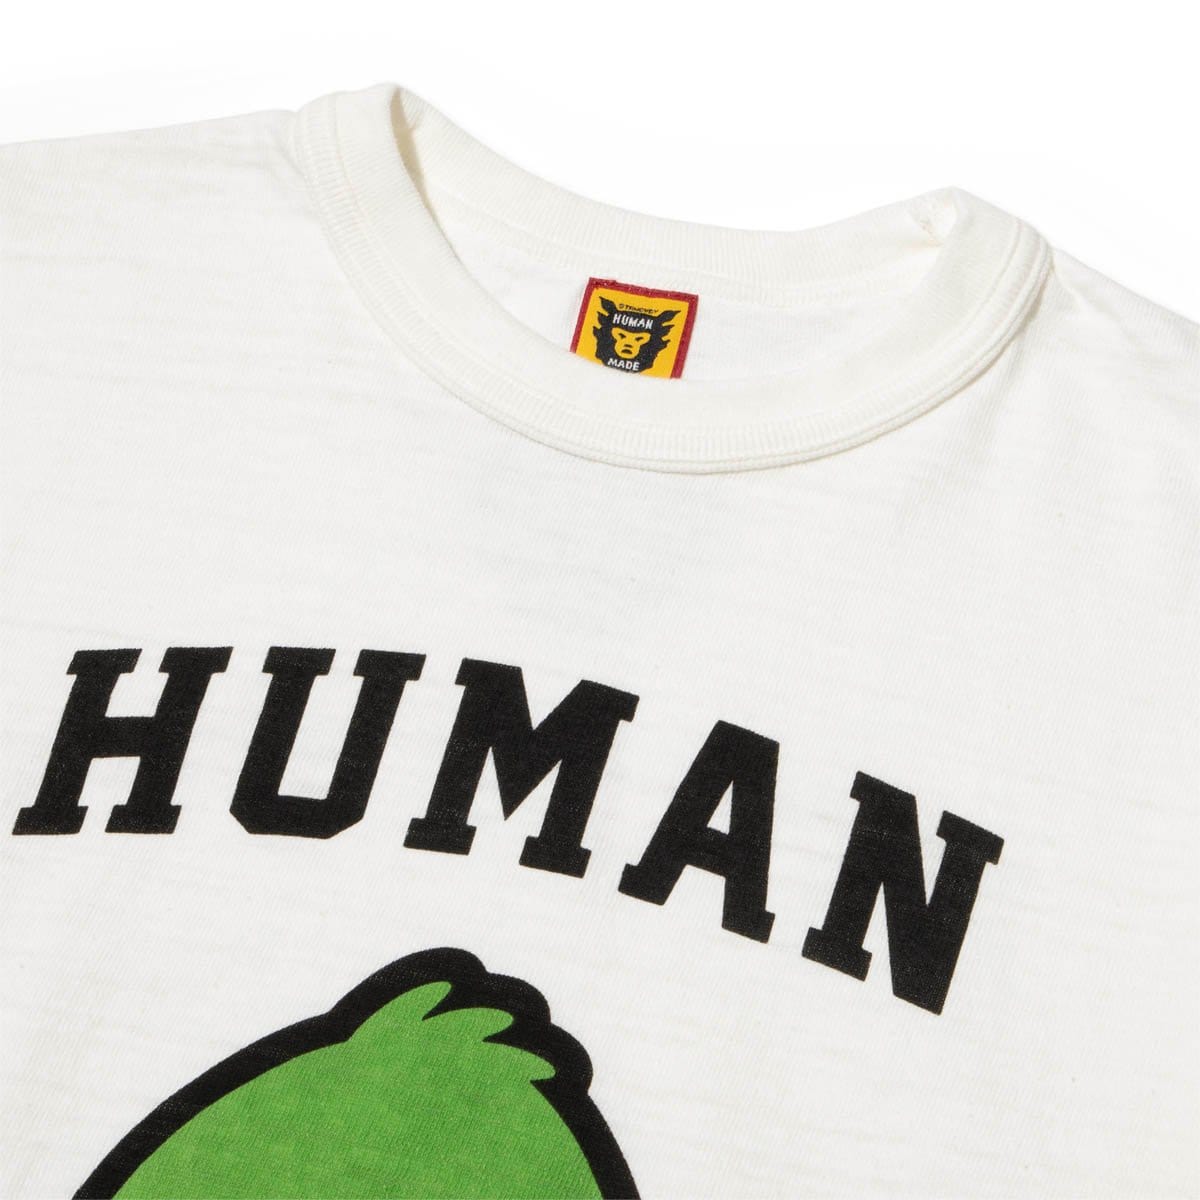 Human Made T-Shirts T-SHIRT #2108